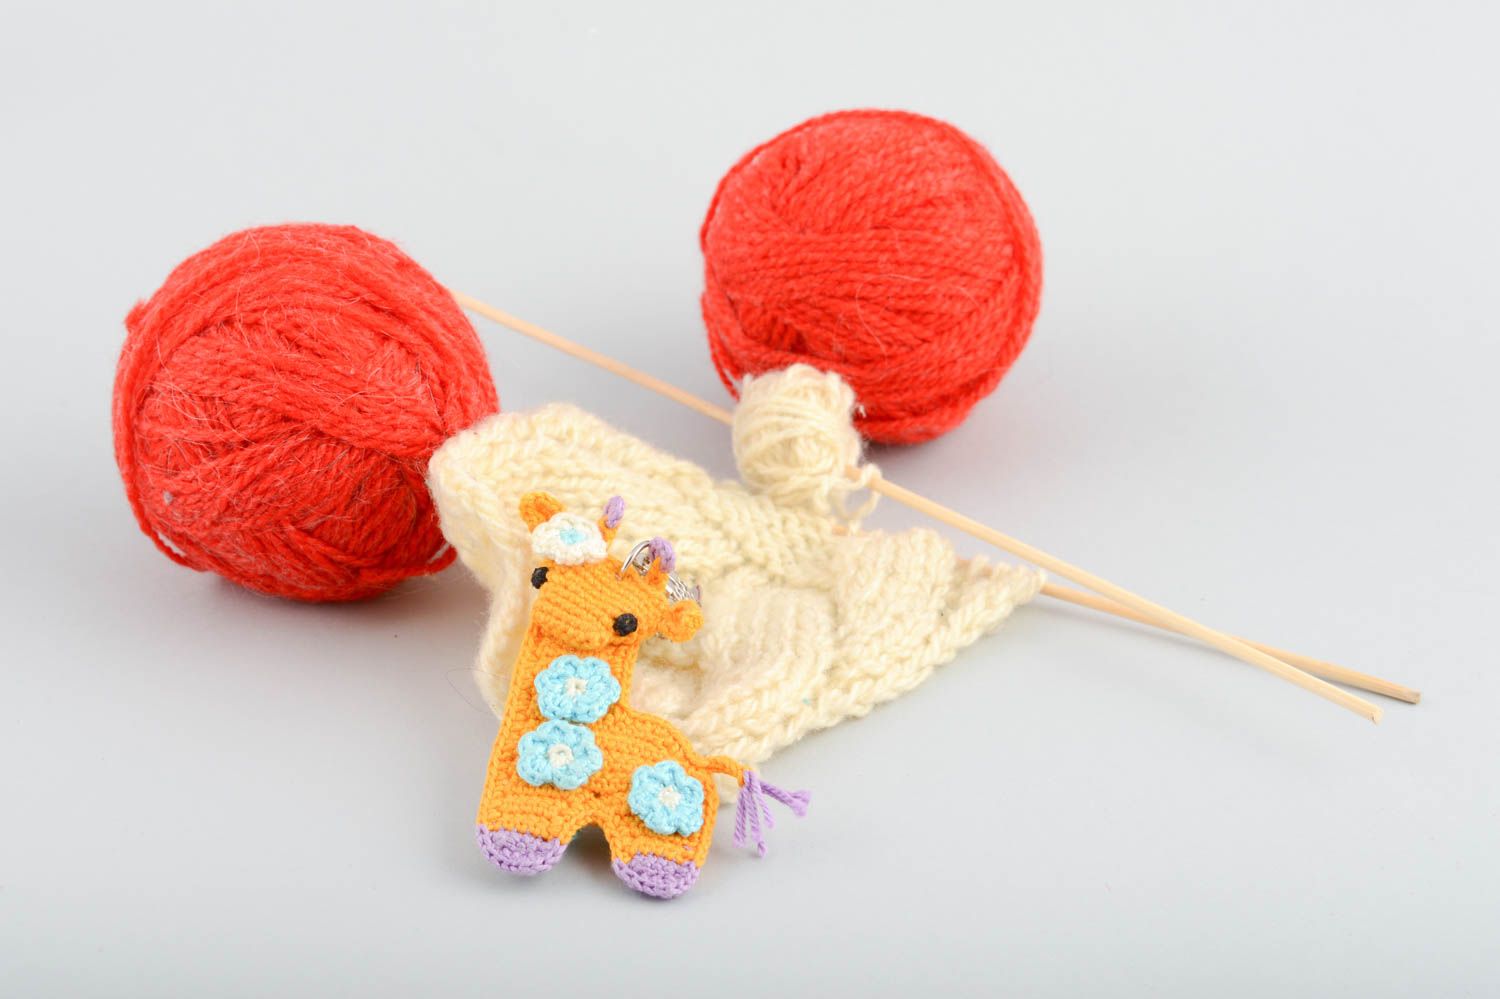 Keychain with soft giraffe toy cute little yellow crocheted handmade accessory photo 1